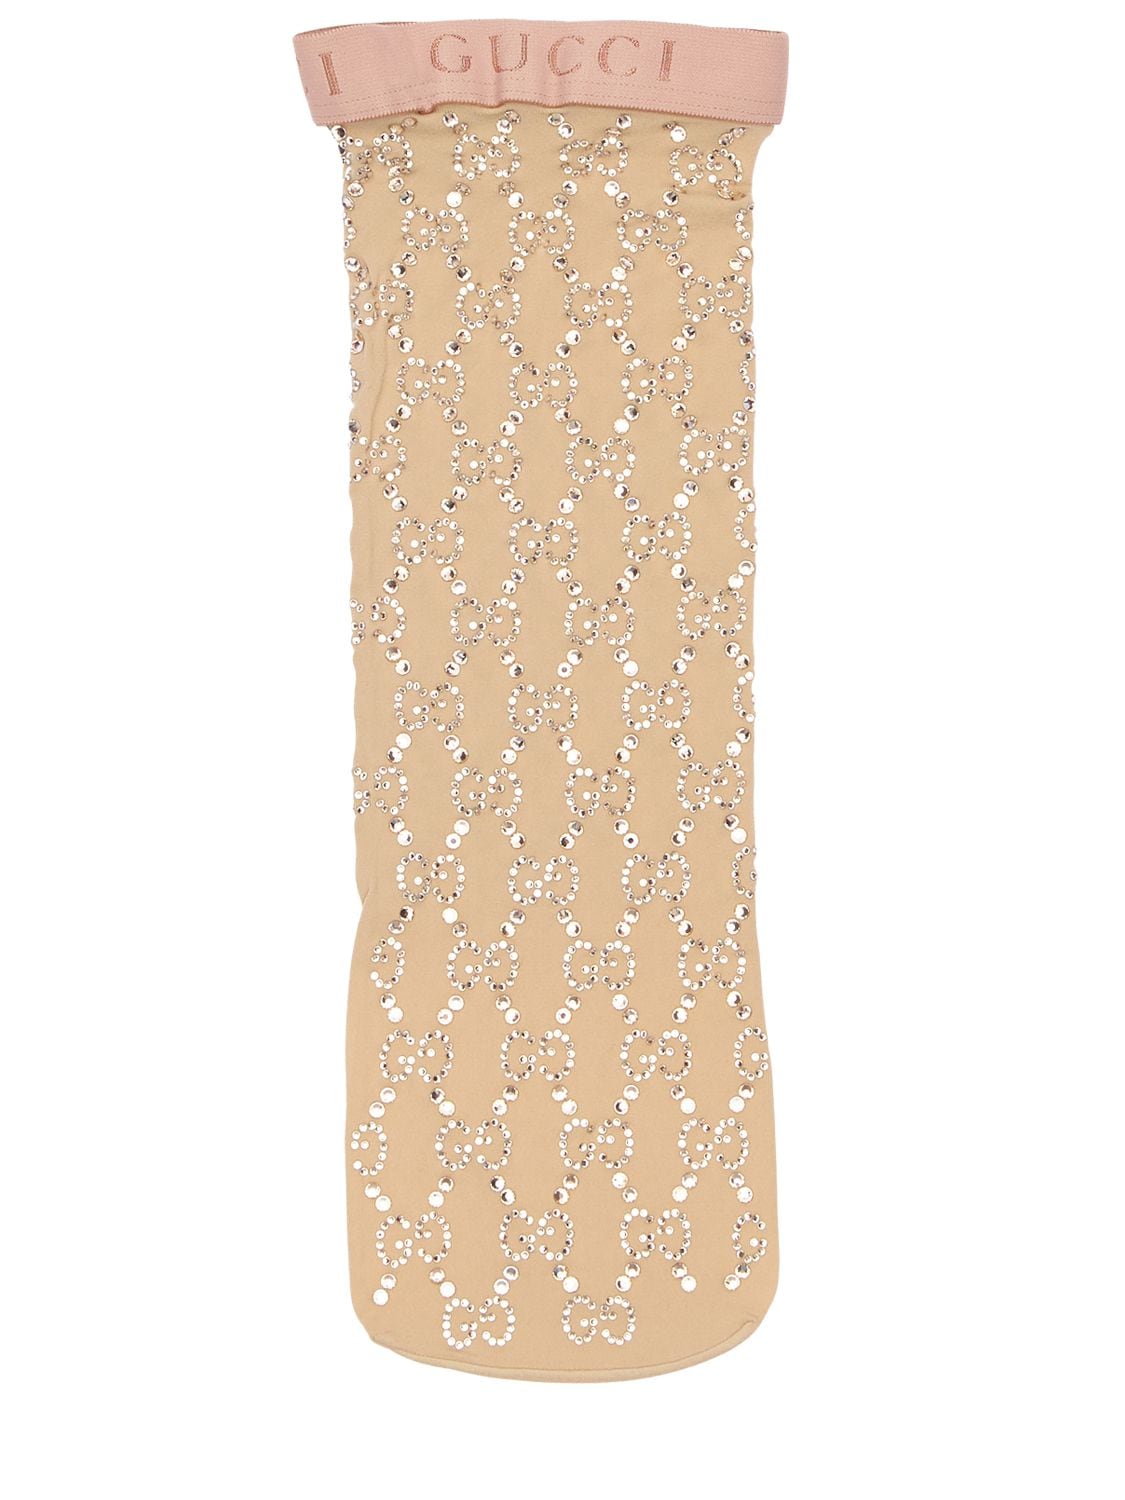 Gucci Gg Embellished Elastic Socks In Ivory